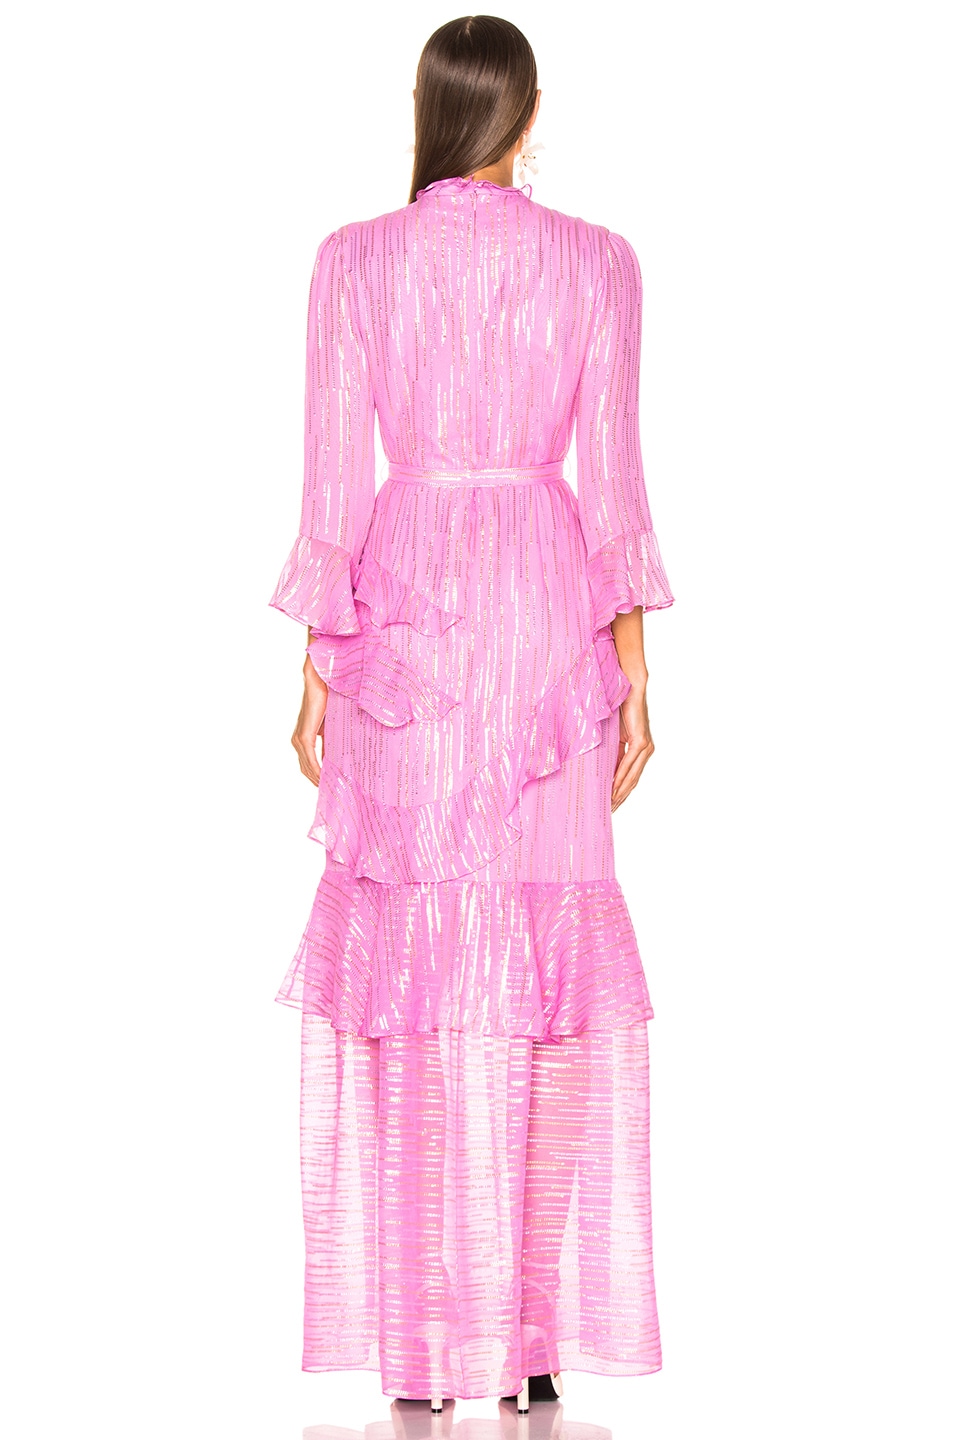 SALONI Marissa Long Dress in Candy Pink Metallic | FWRD